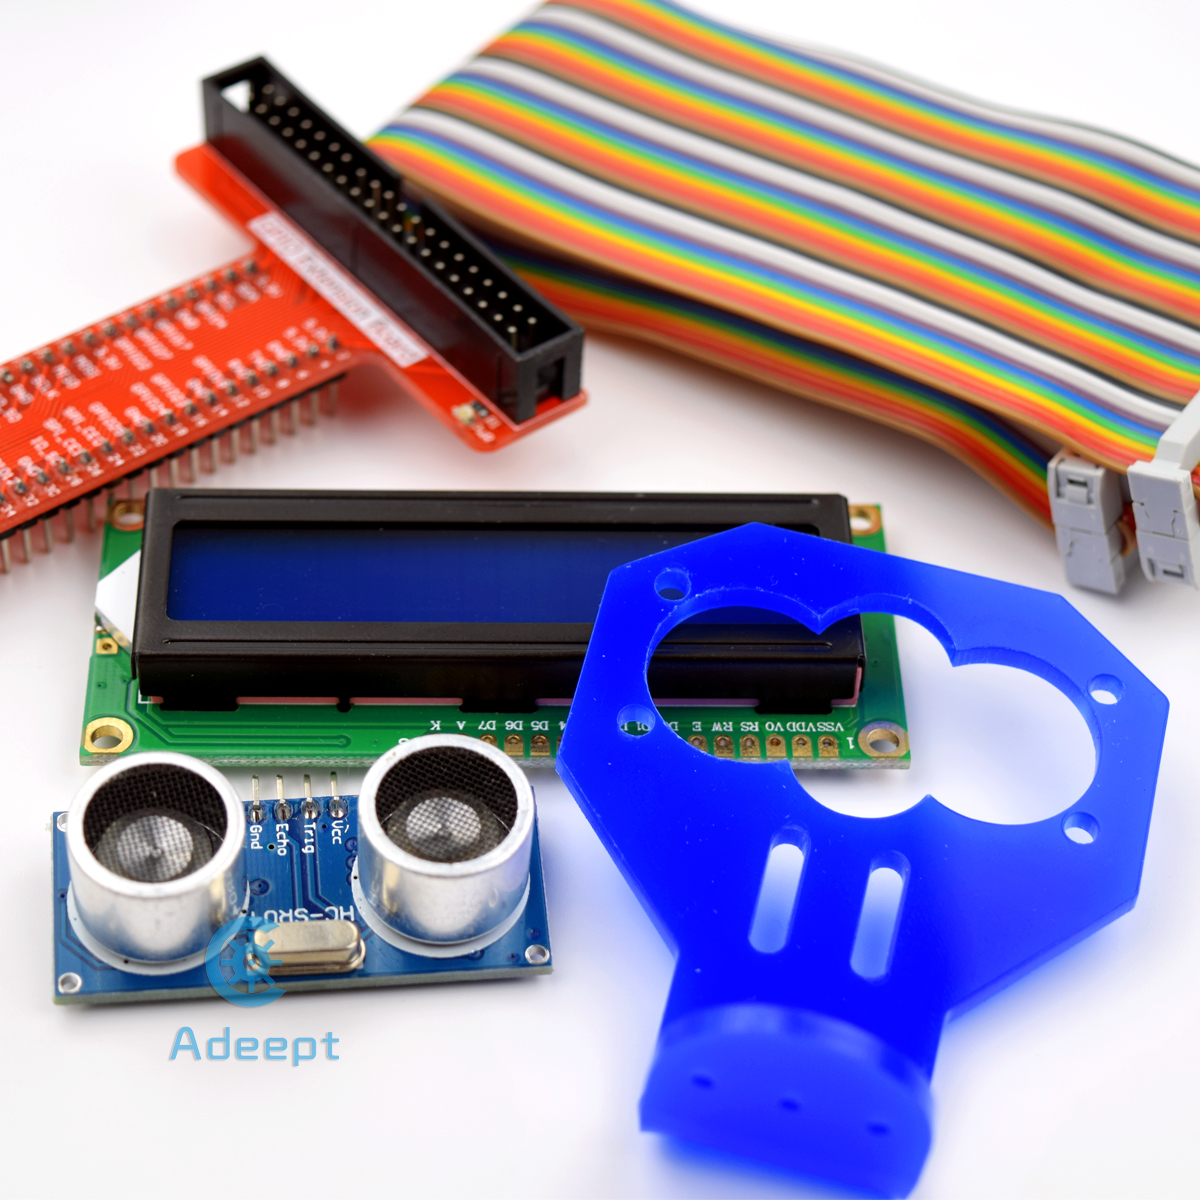 Adeept Ultrasonic Distance Sensor Starter Kit für Raspberry Pi - Zum Vergrößern klicken